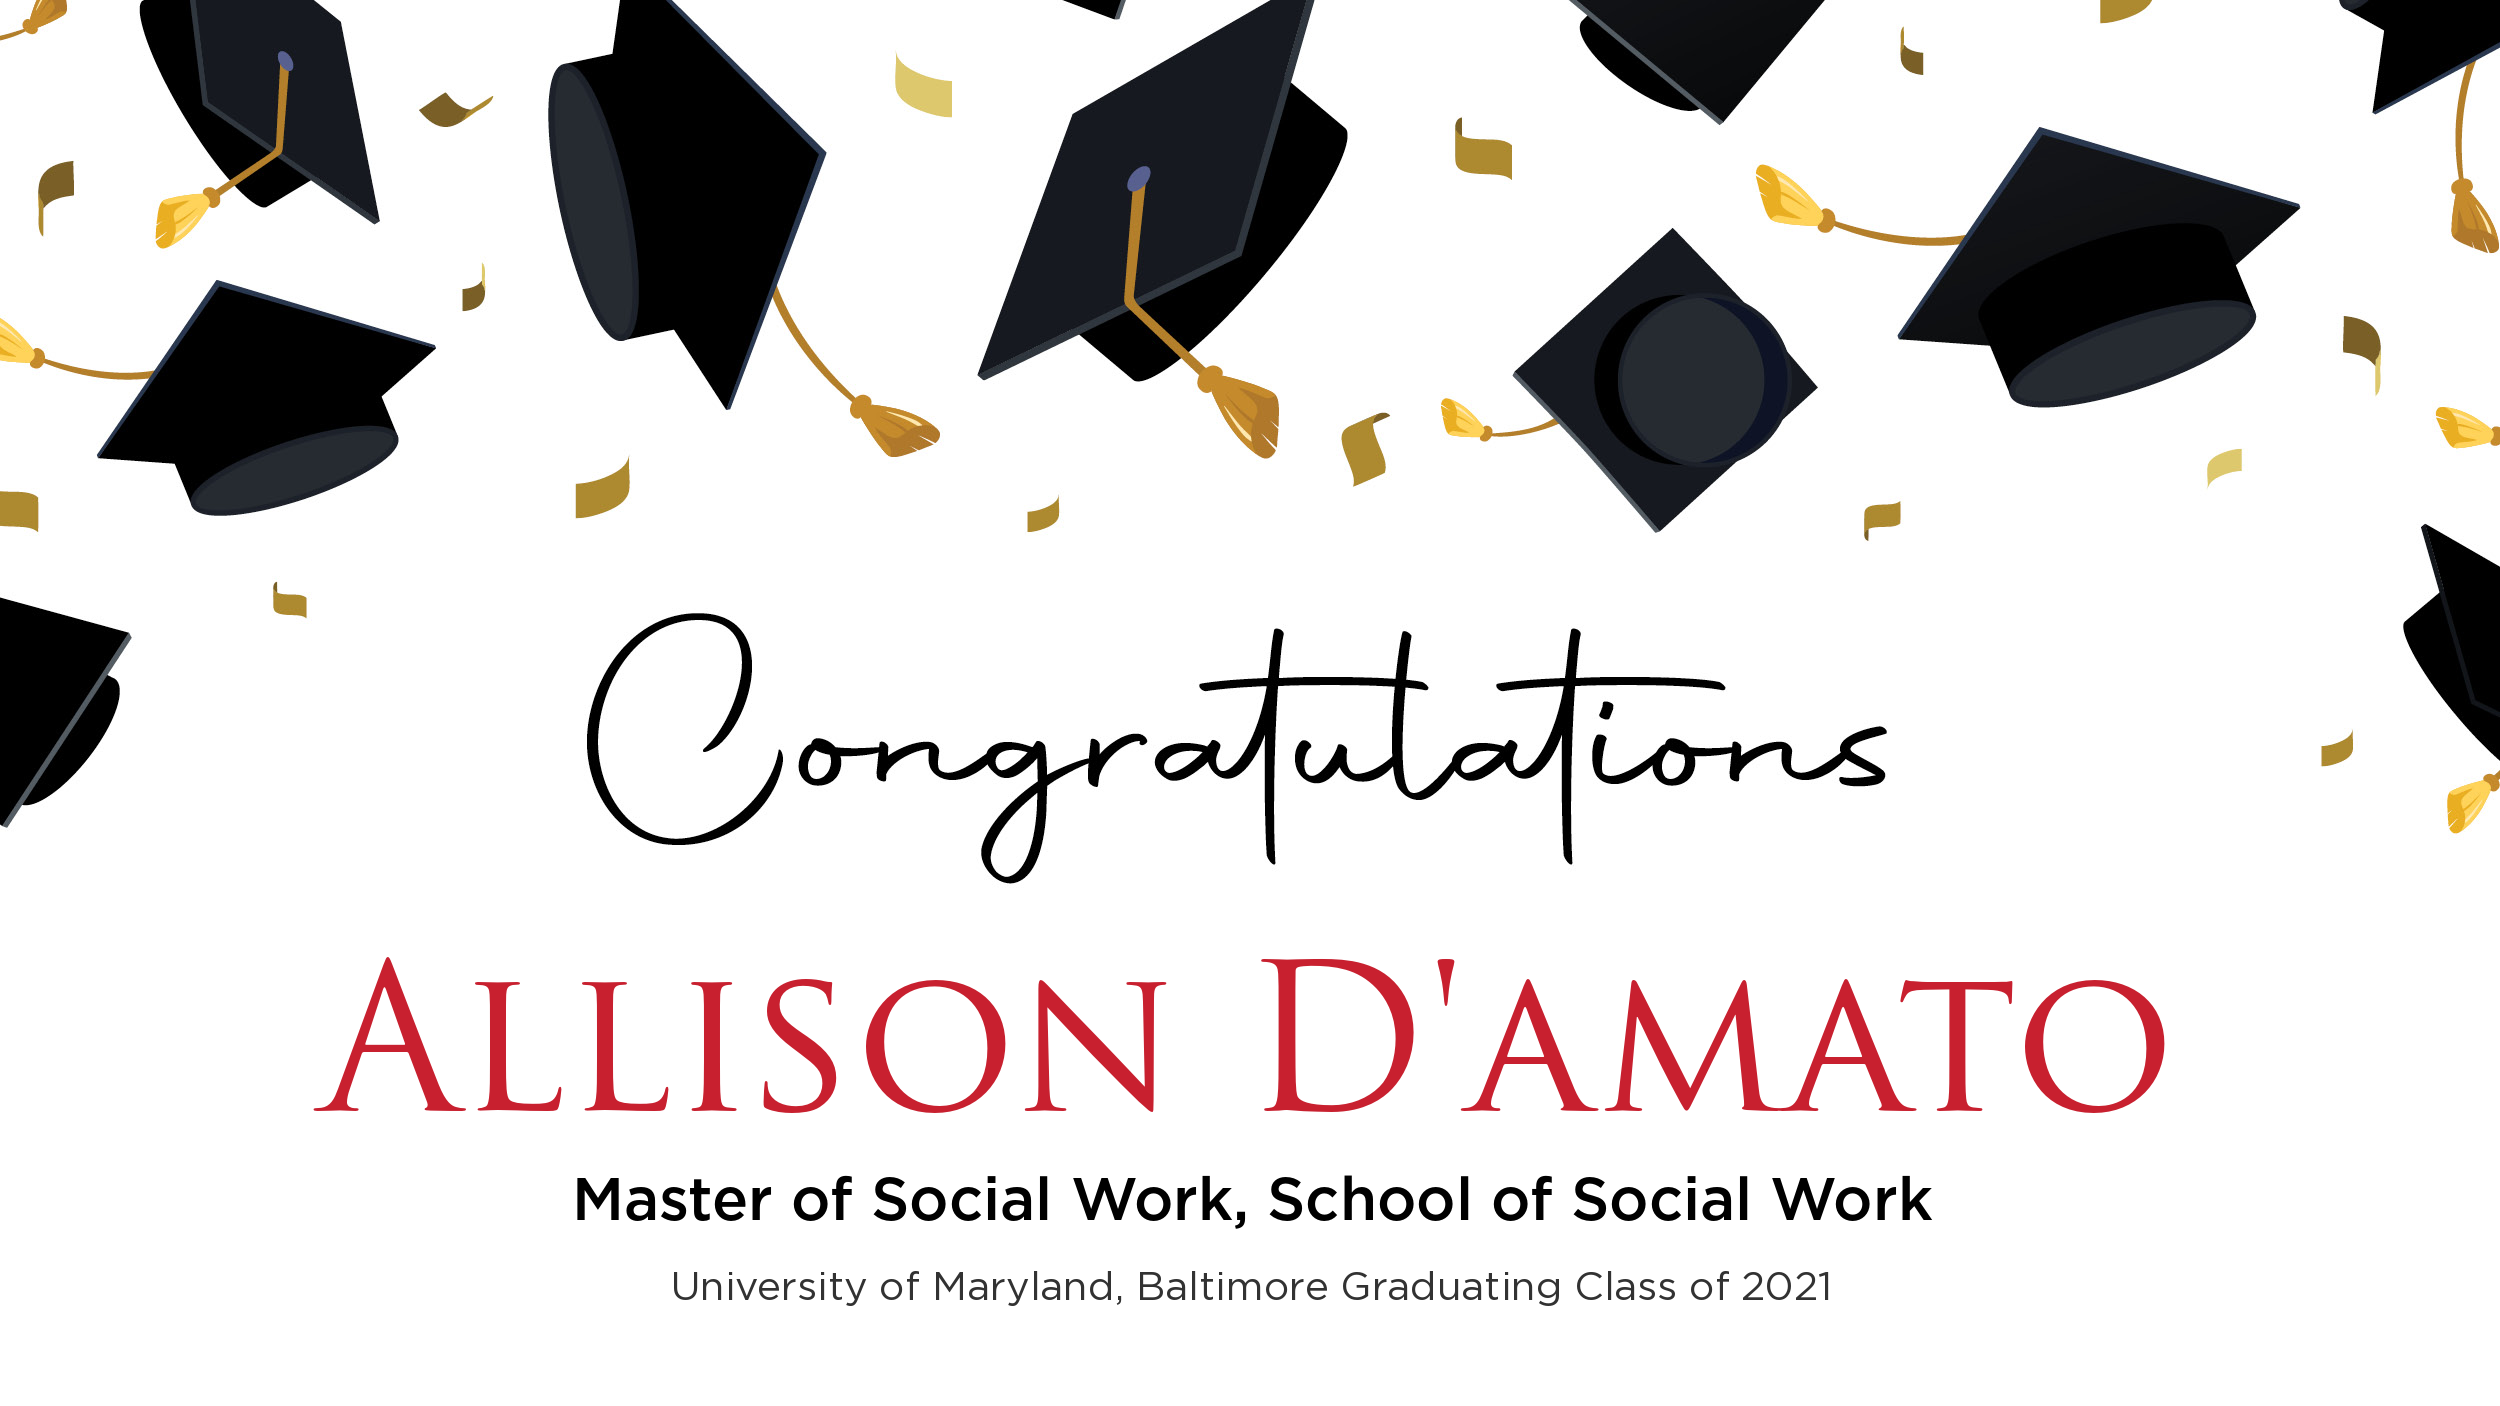 Congratulations Allison D'amato, Master of Social Work